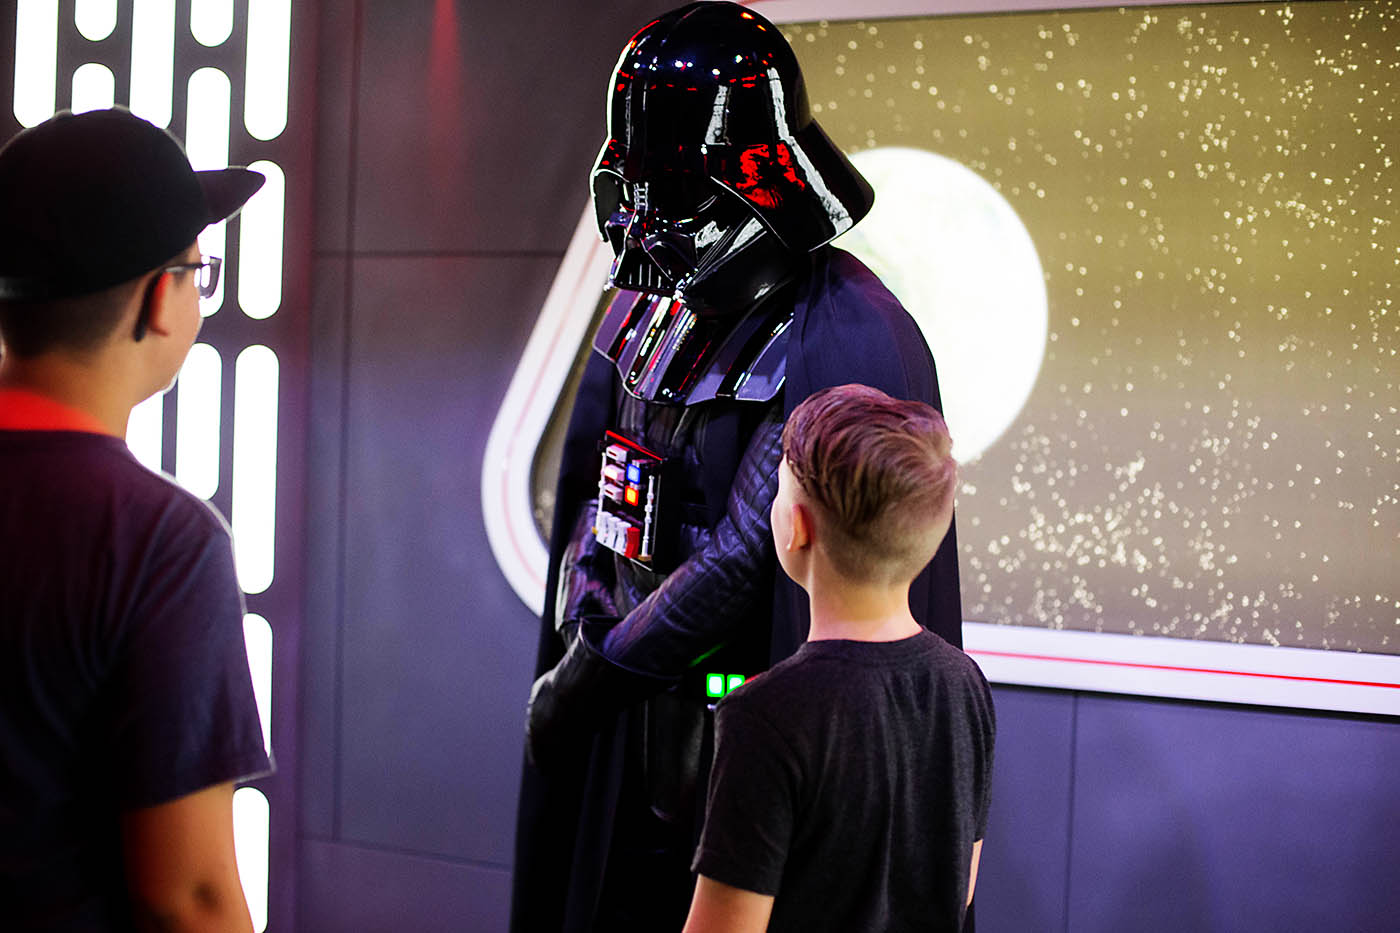 5 Ways to Celebrate Star Wars at Disneyland during Season of the Force!